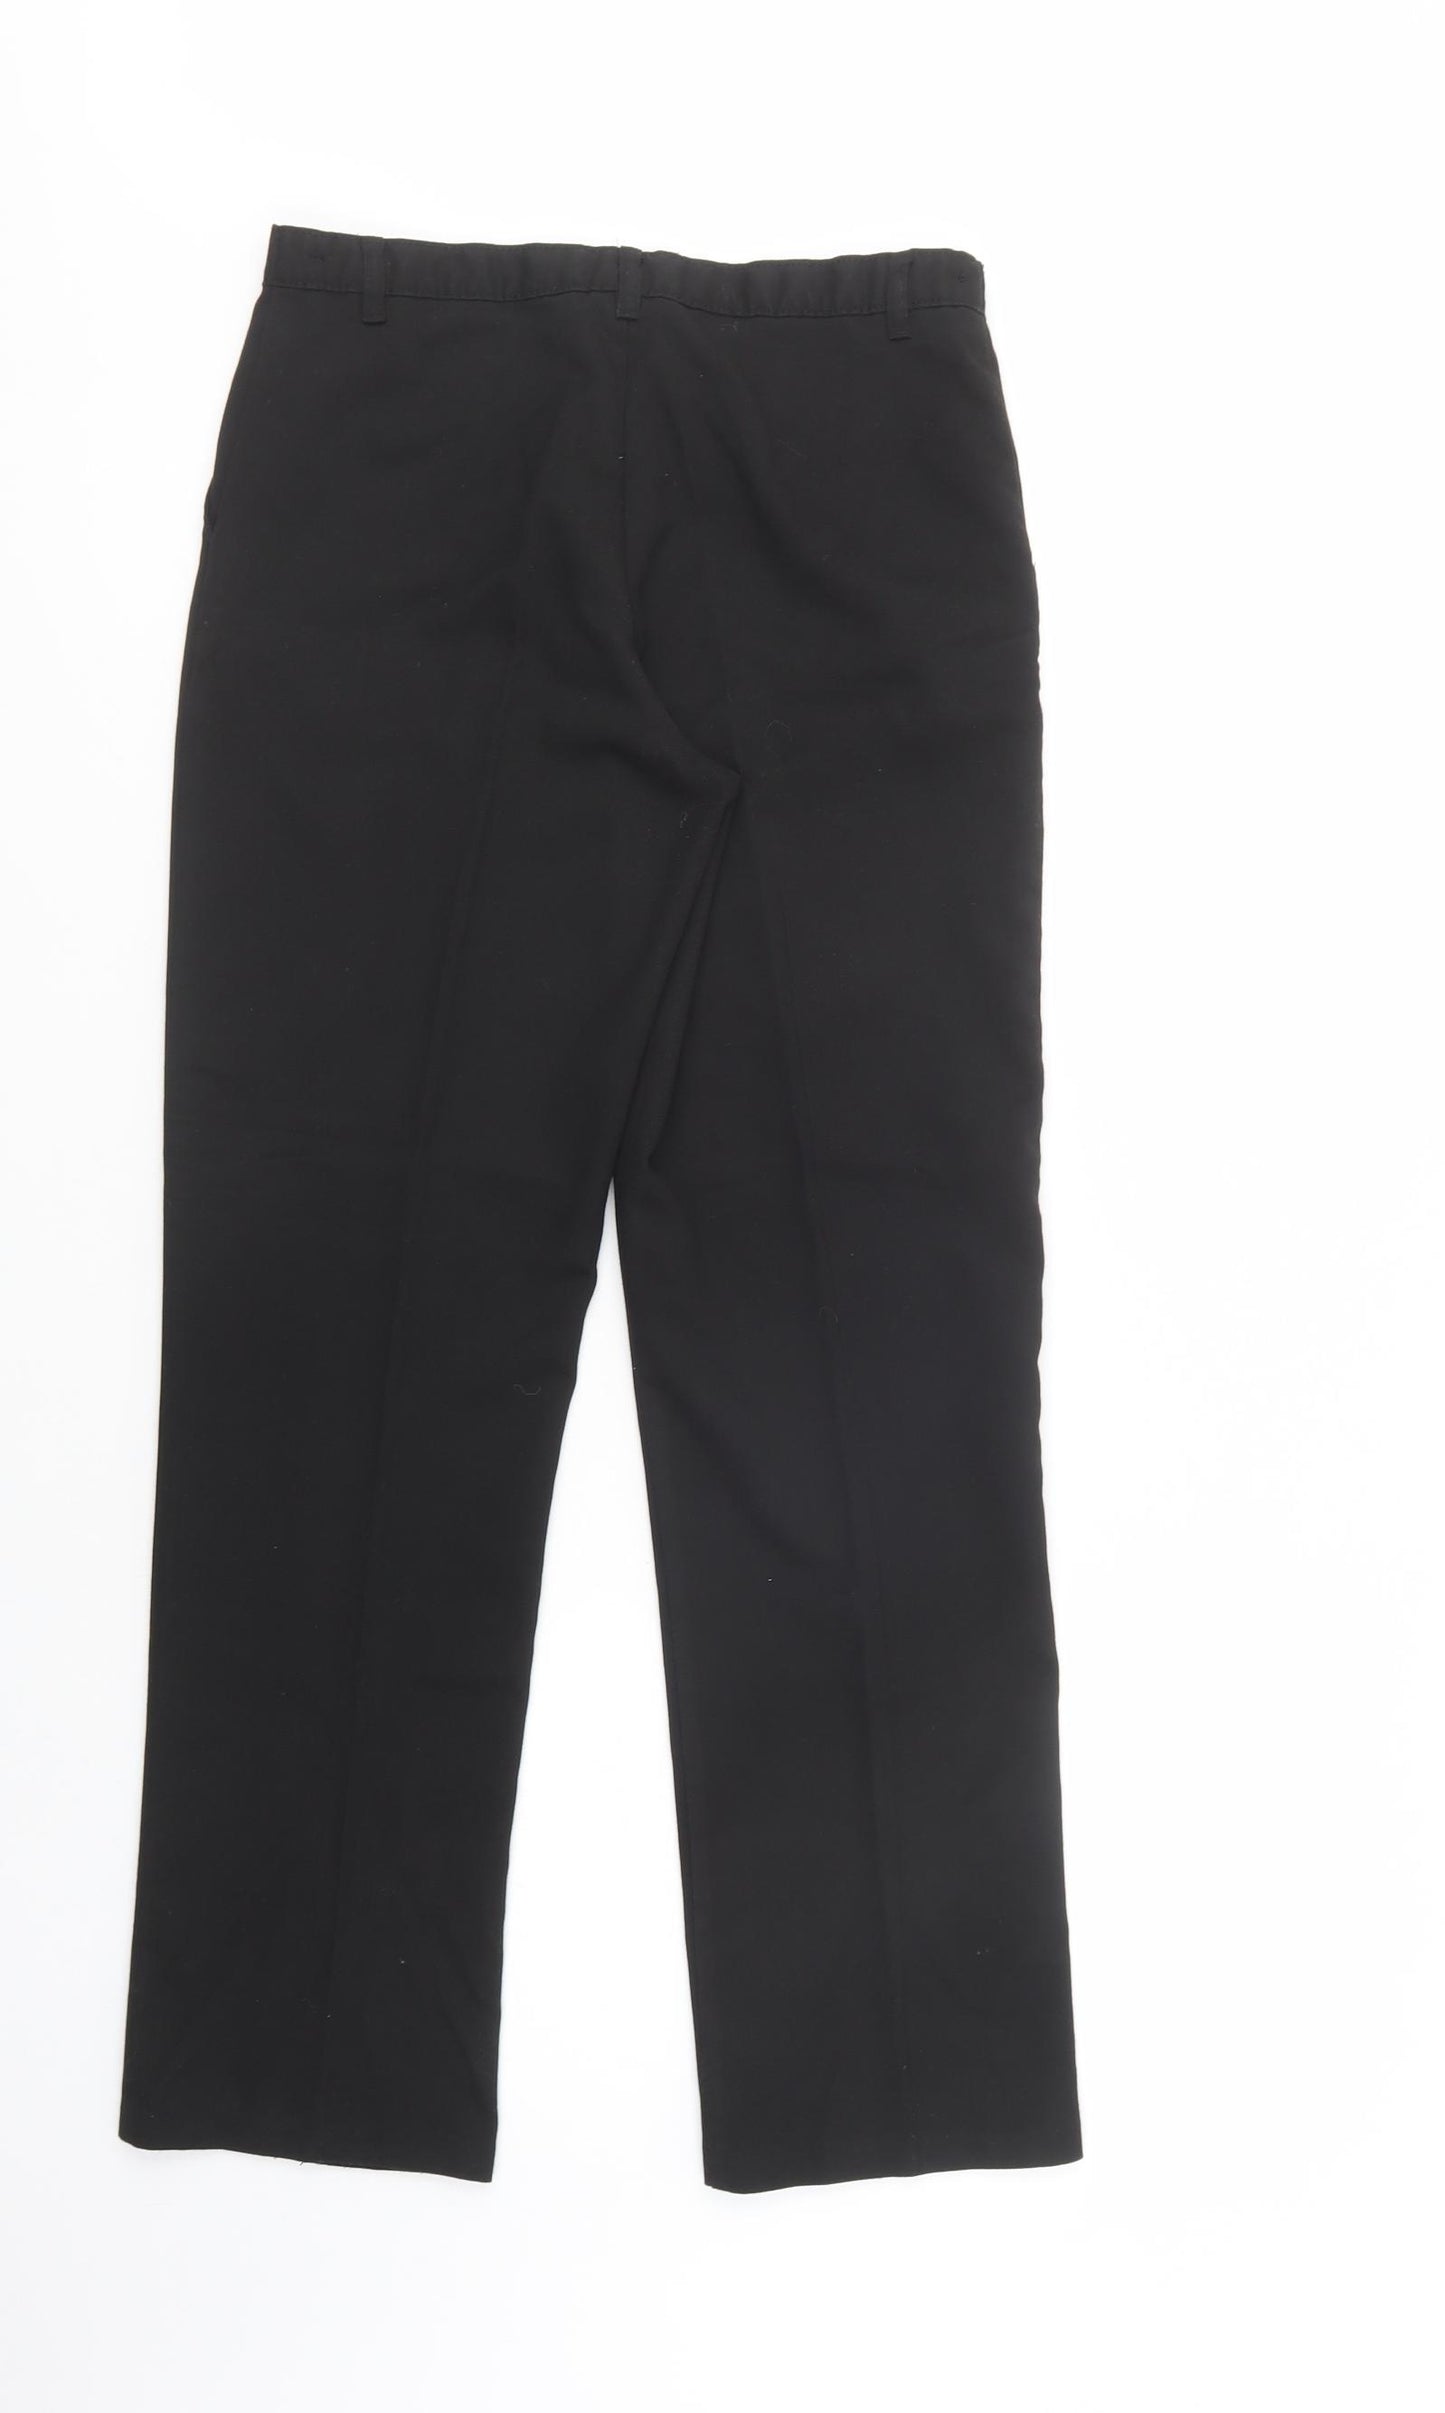 George Girls Black  Polyester Dress Pants Trousers Size 13-14 Years  Regular Button - School Wear